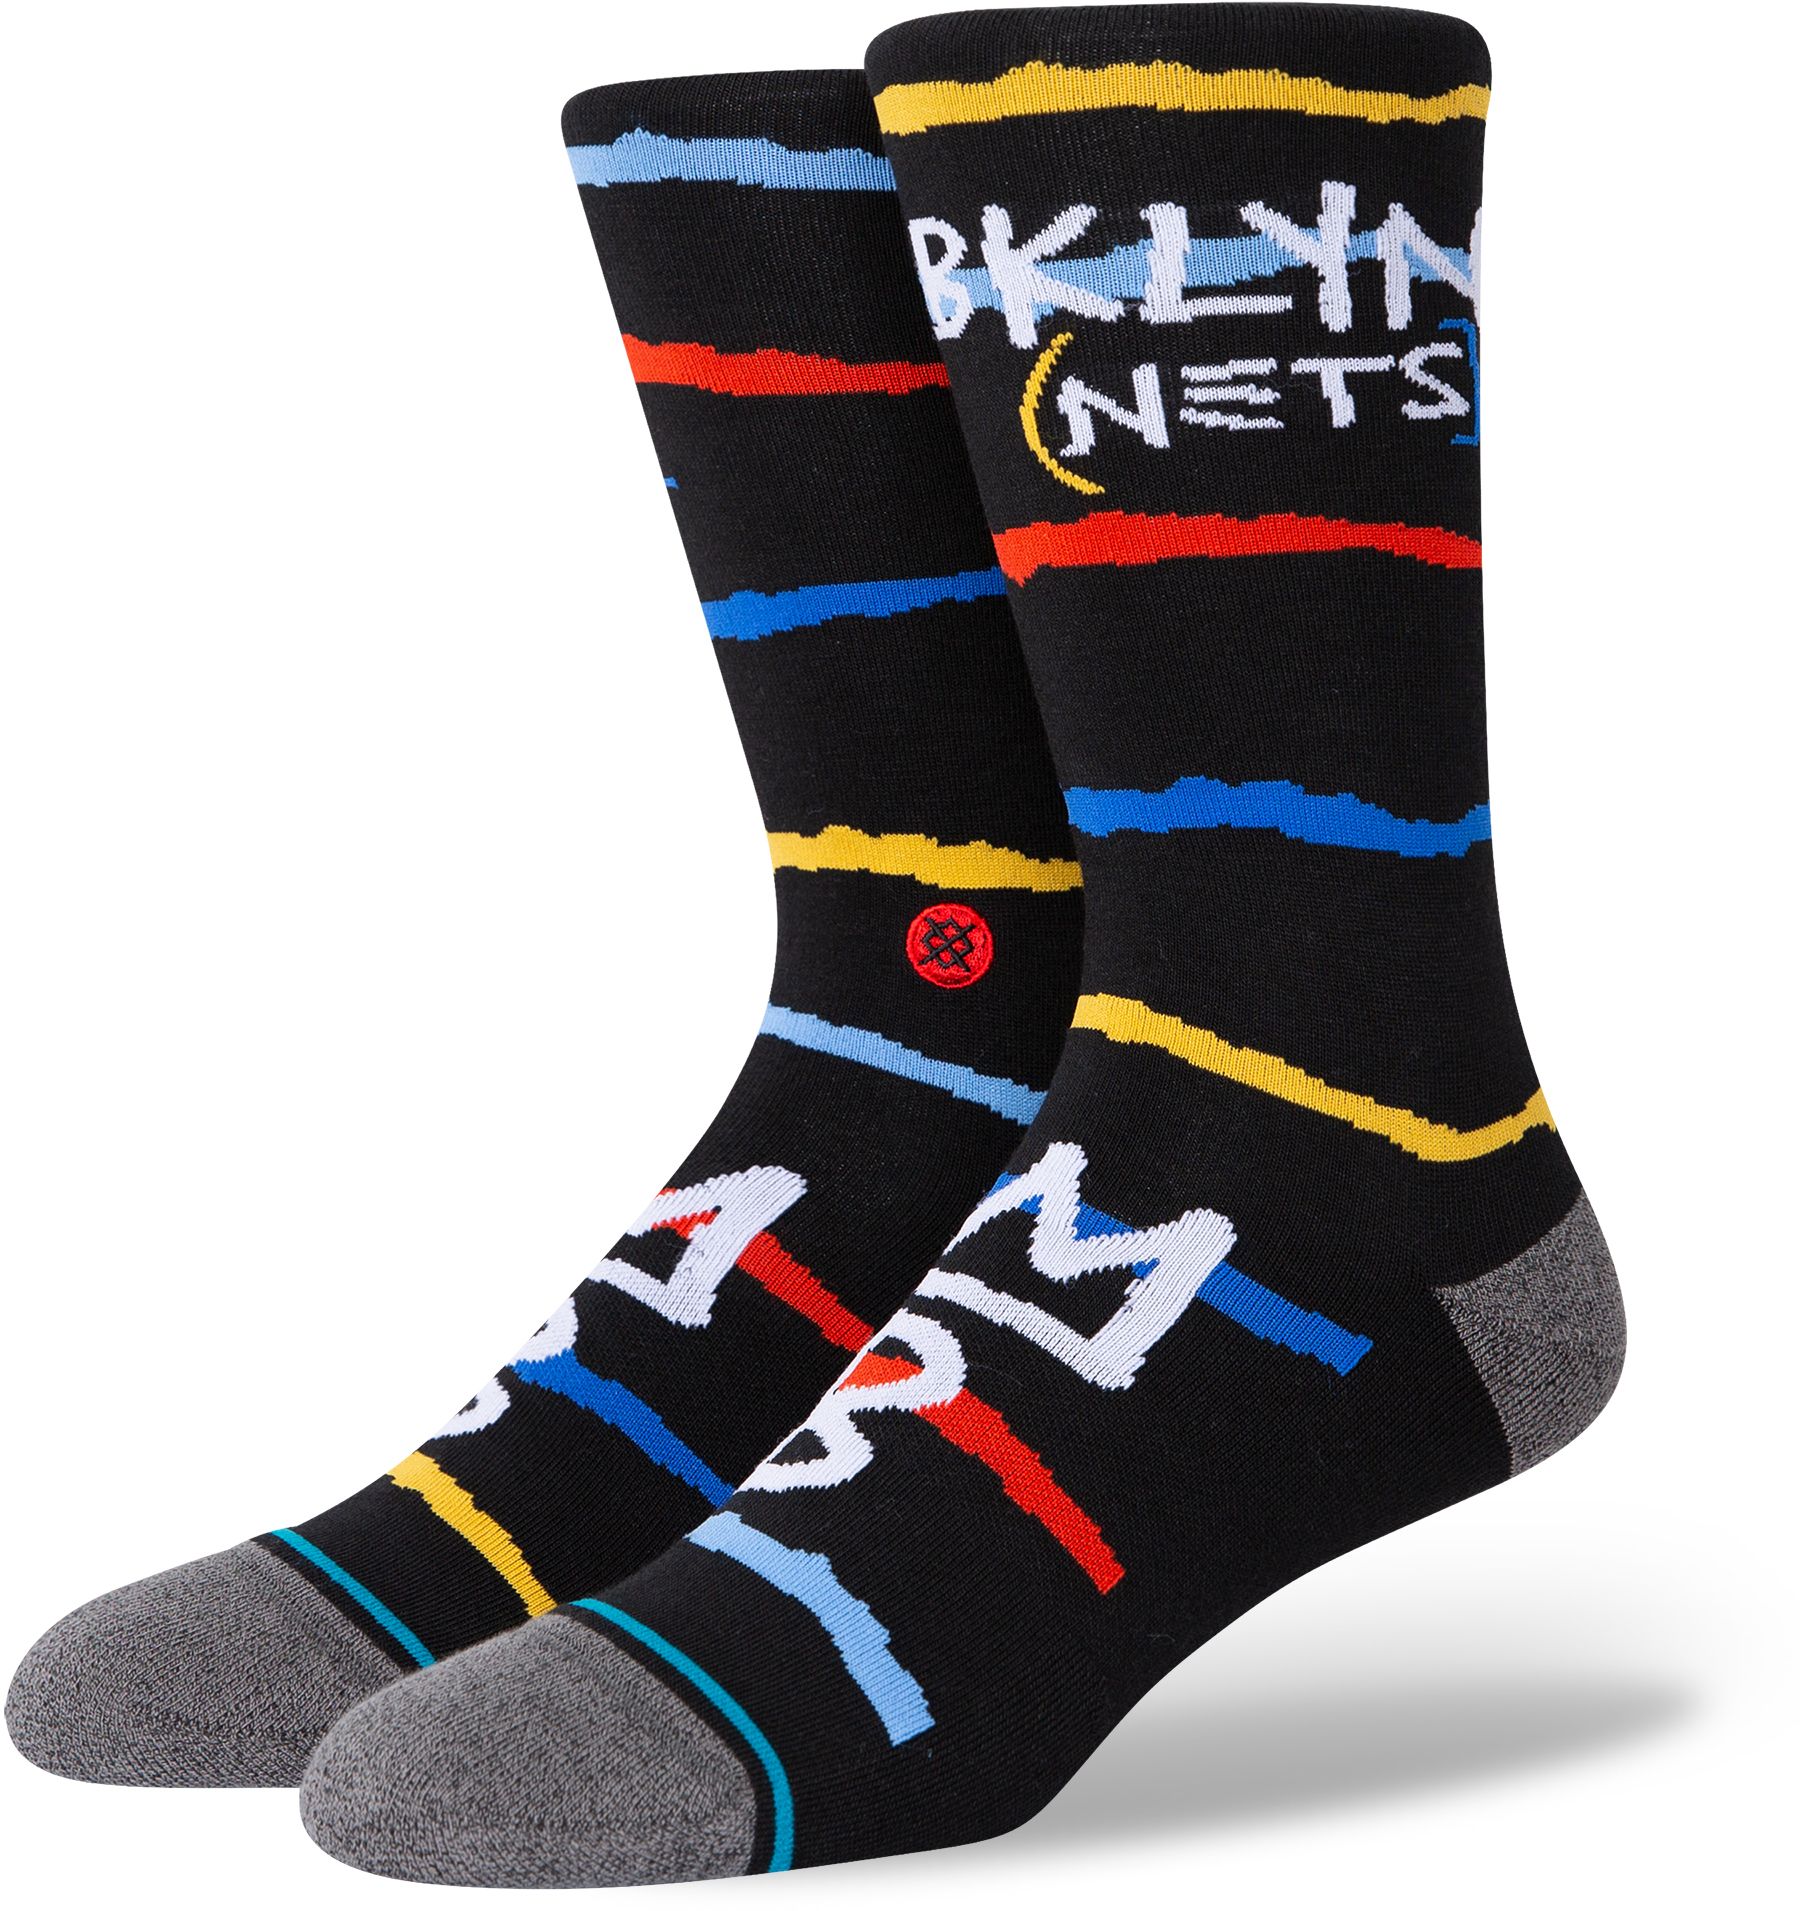 brooklyn nets socks